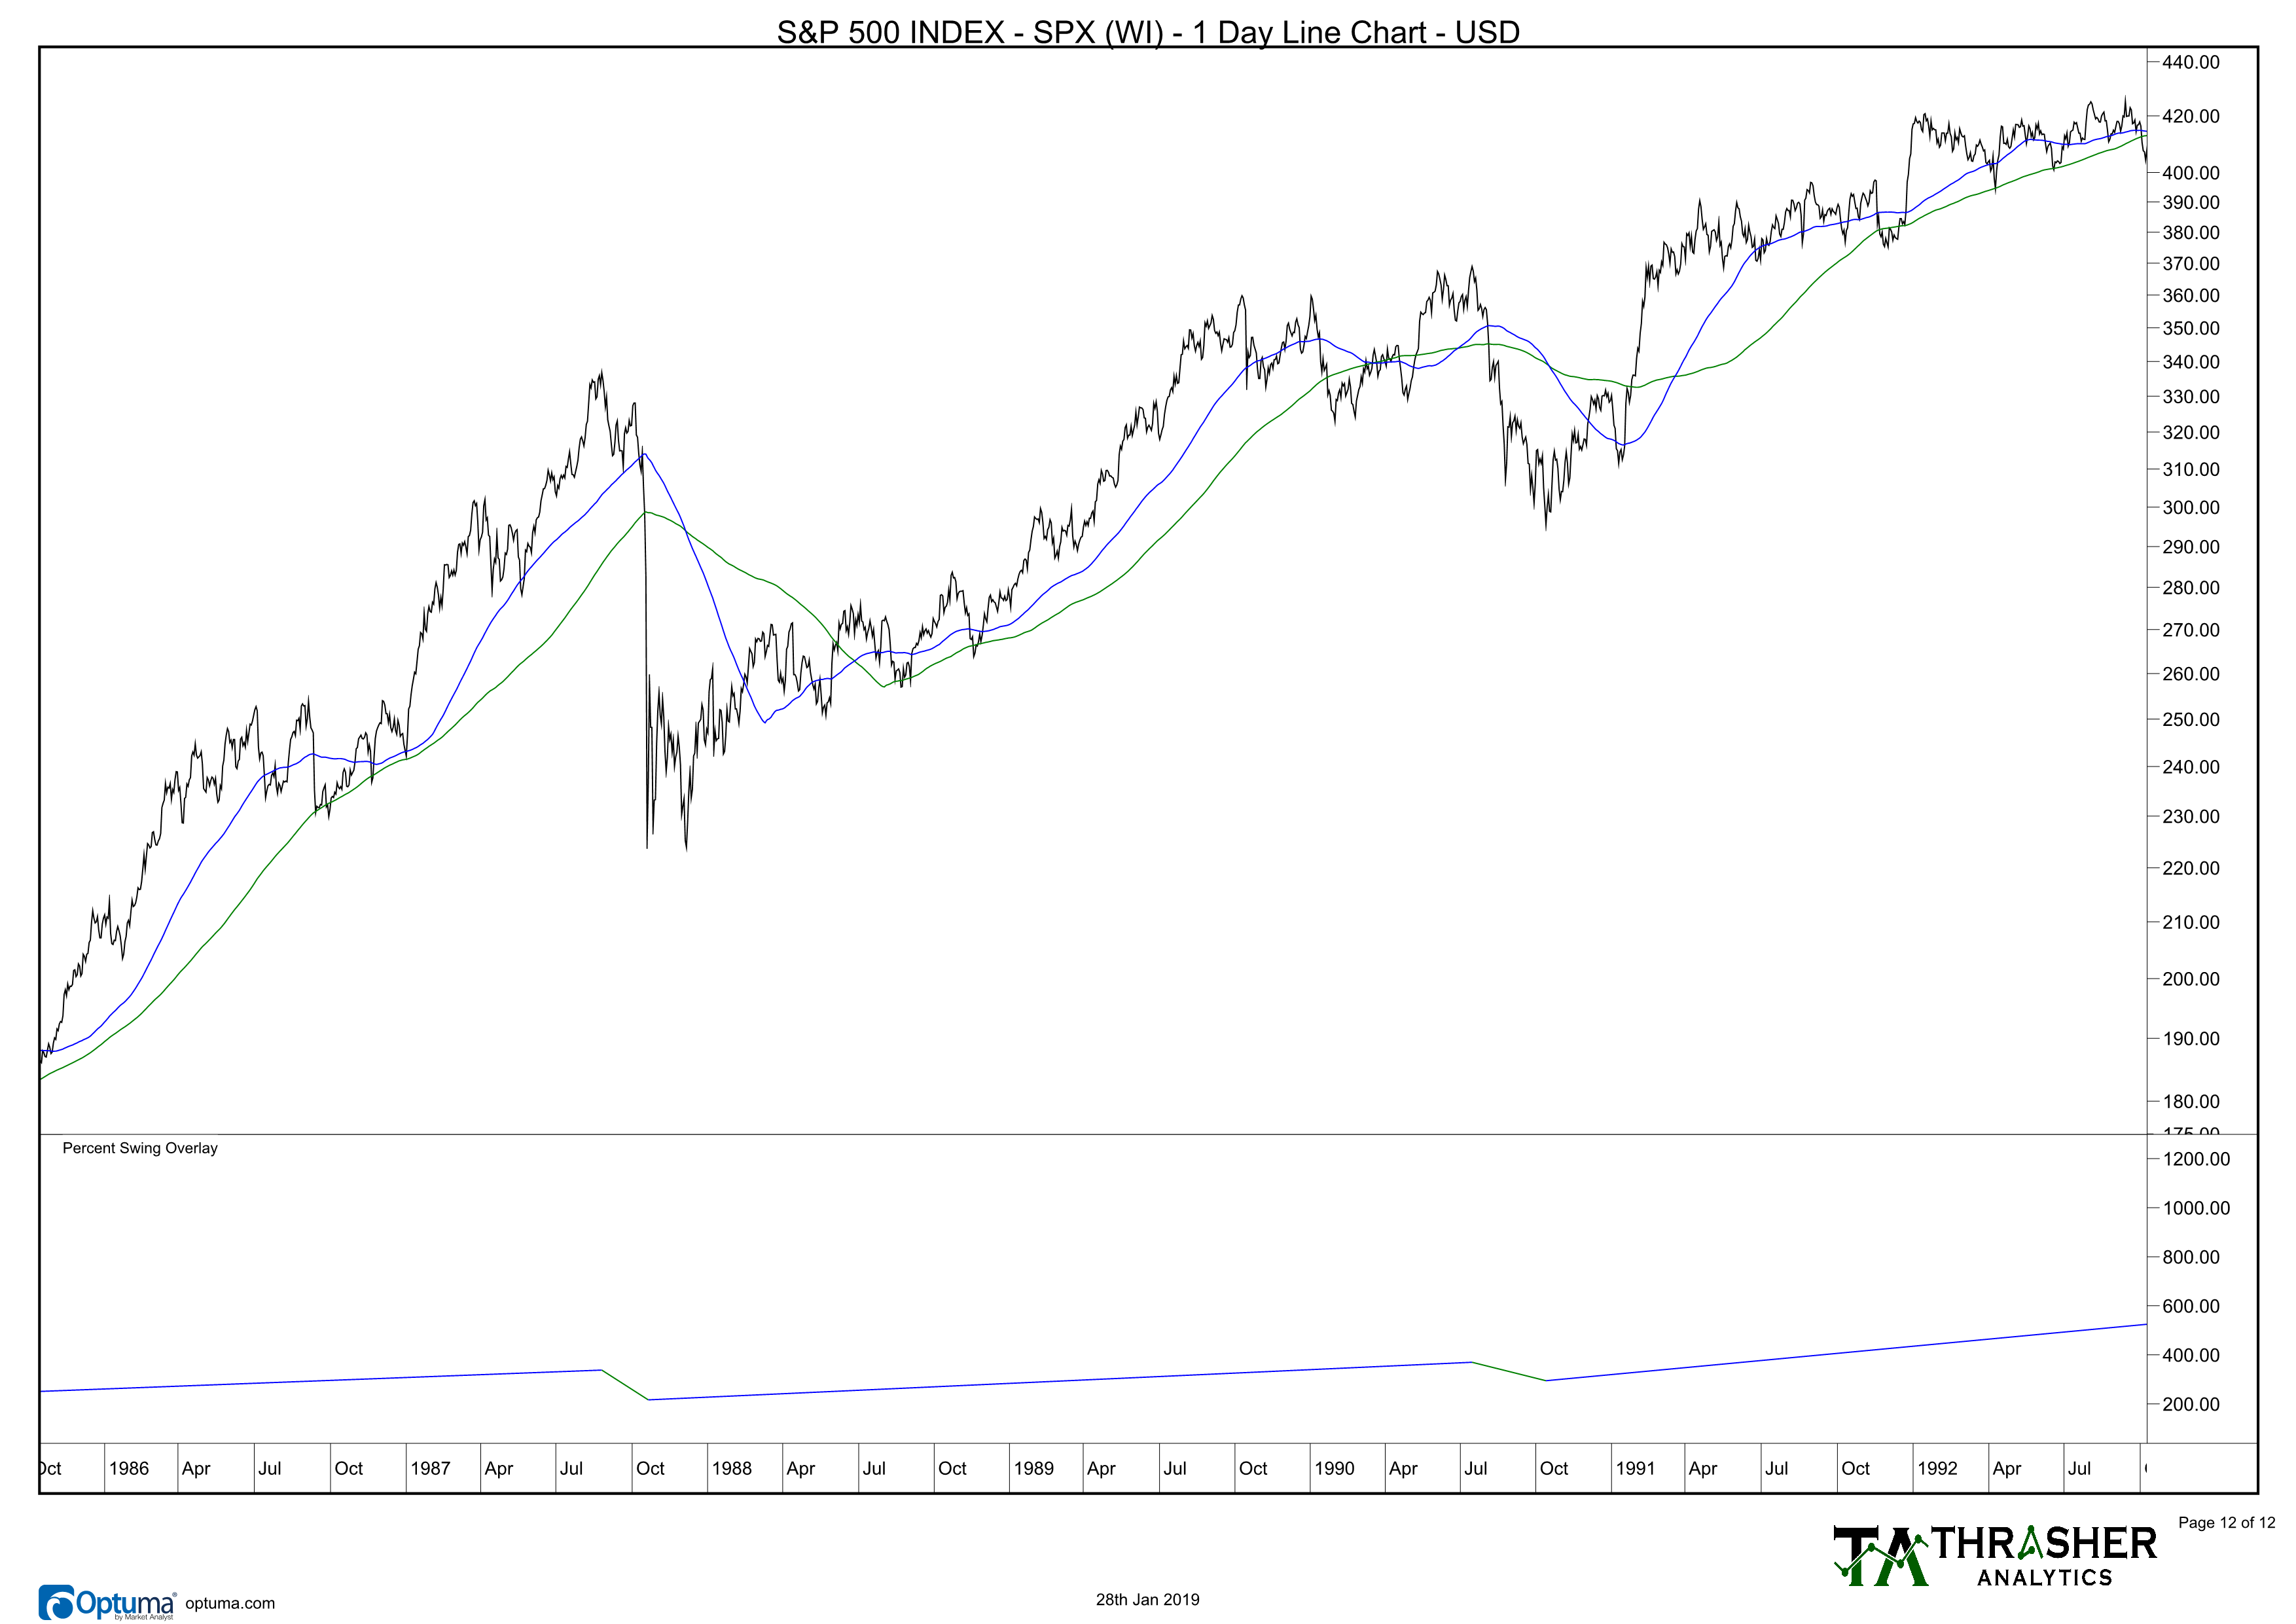 S&P 500: 1987